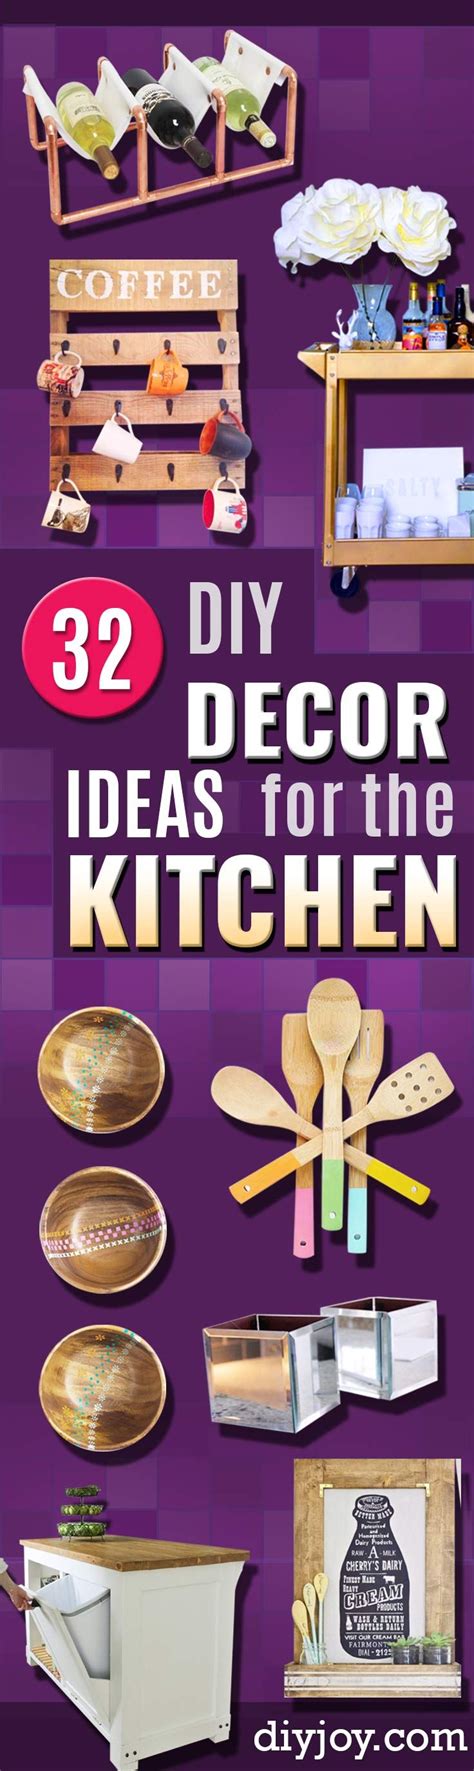 37 Creative DIY Kitchen Decor Ideas | Diy kitchen decor, Diy home decor projects, Rustic diy ...